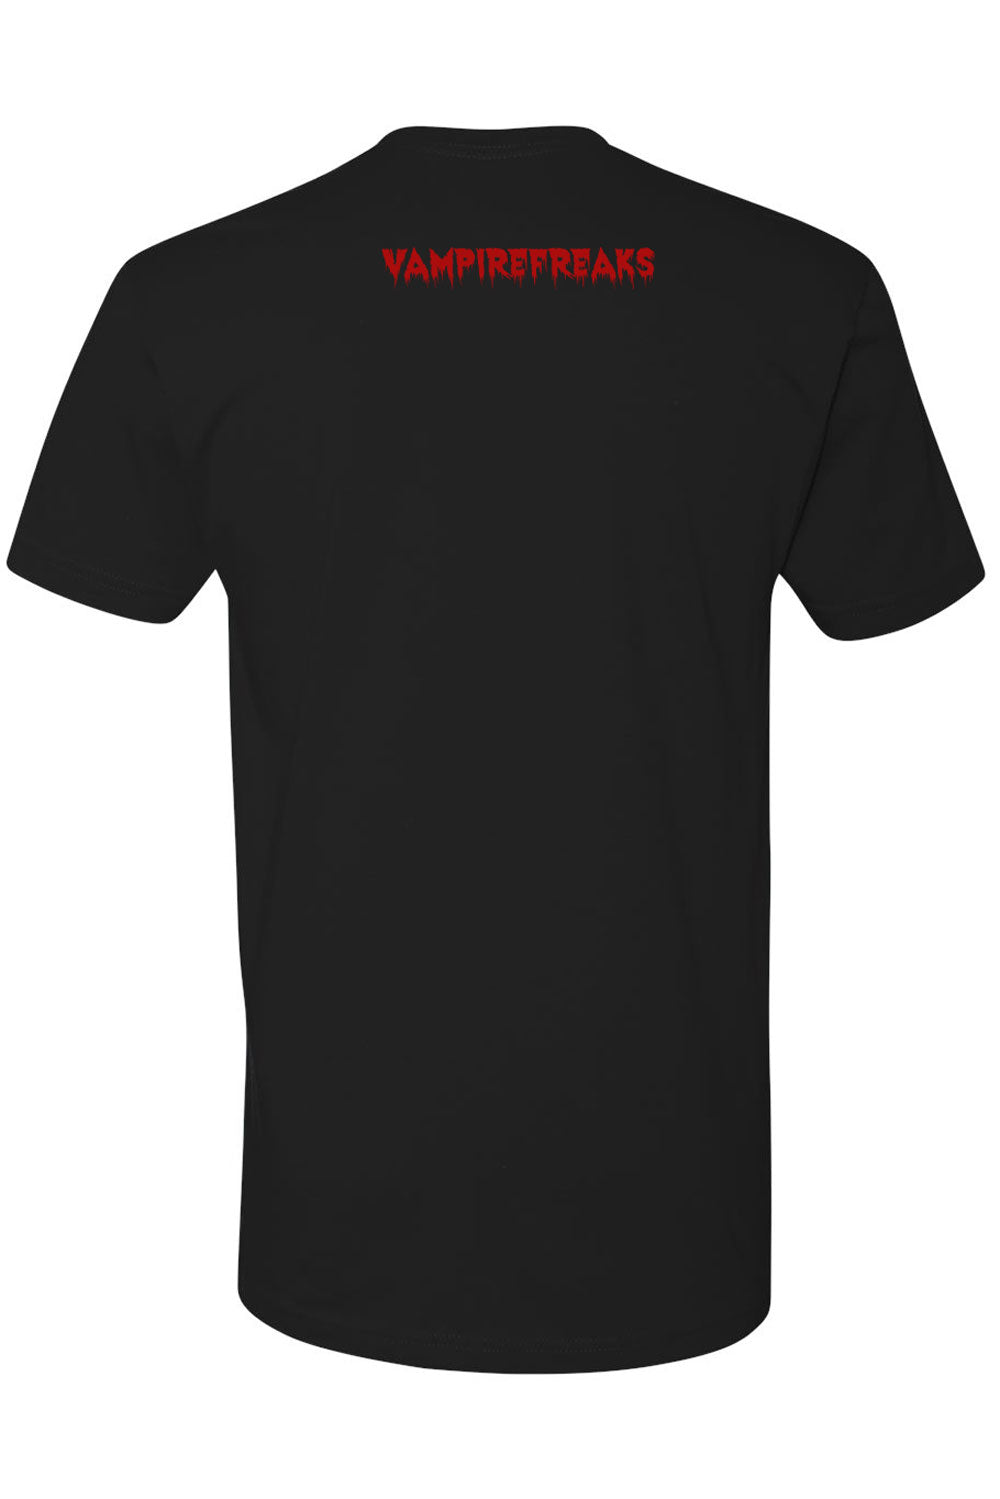 black gothic short sleeve graphic tshirt